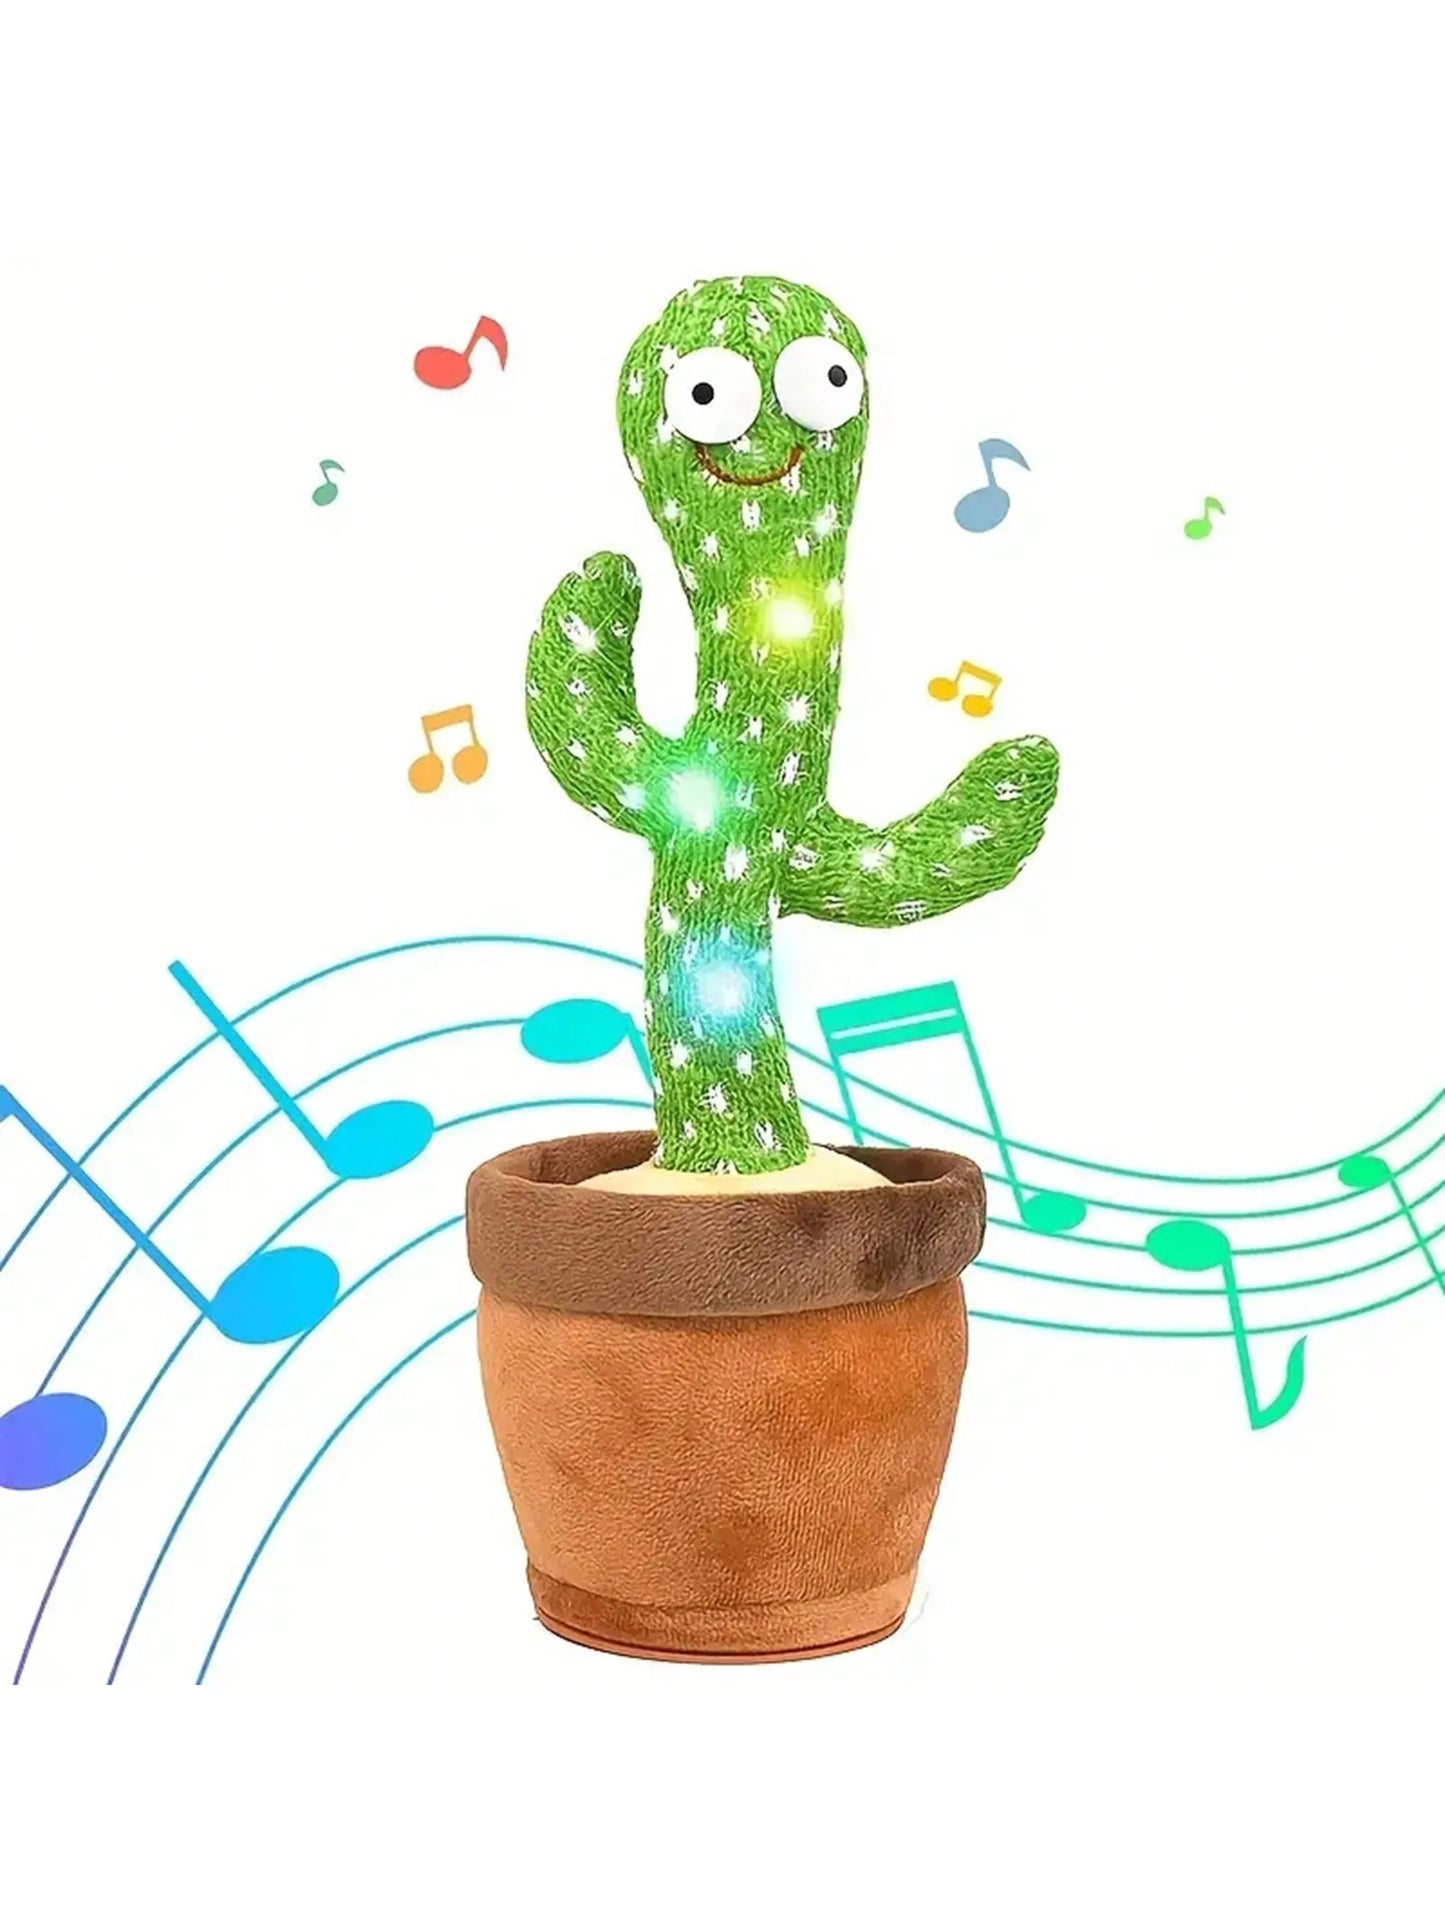 Sound Mimicking Dancing and Singing Cactus Toy